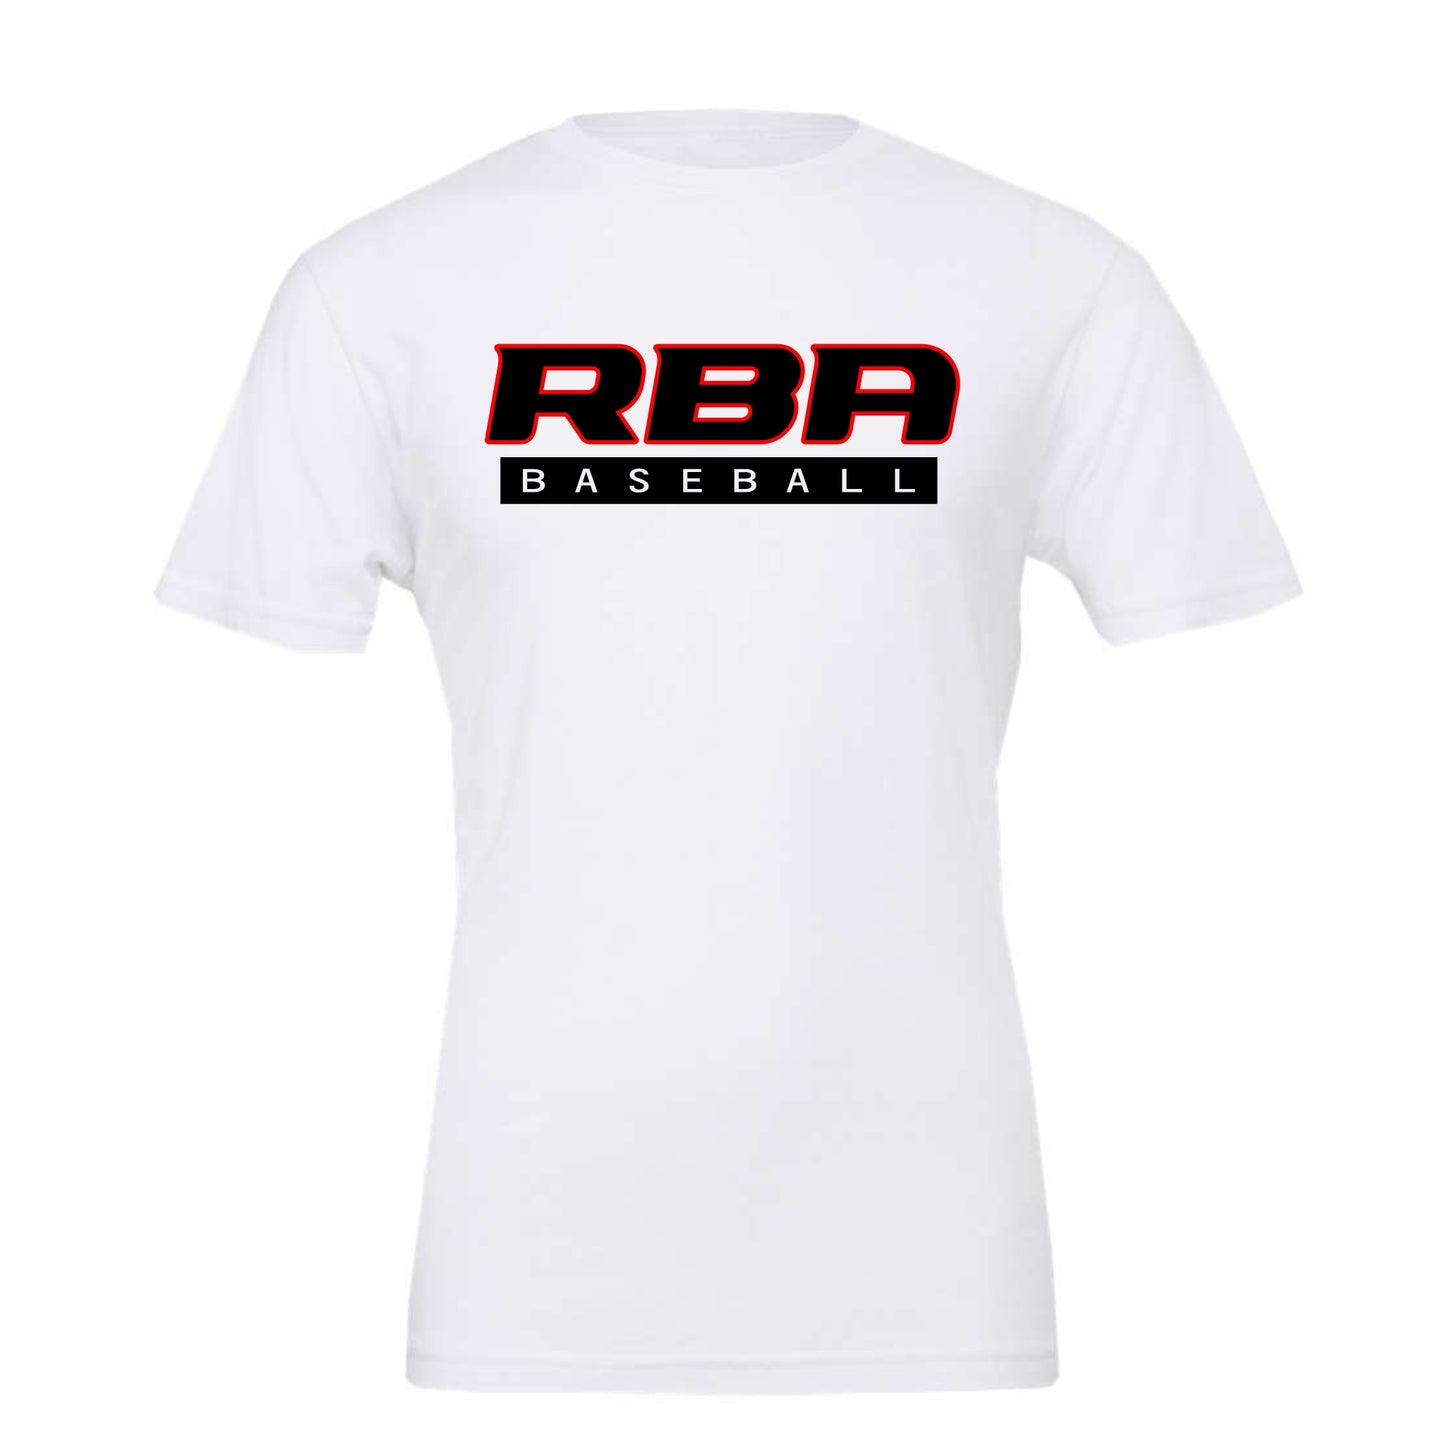 RBA Baseball Next Level Youth Premium Tee